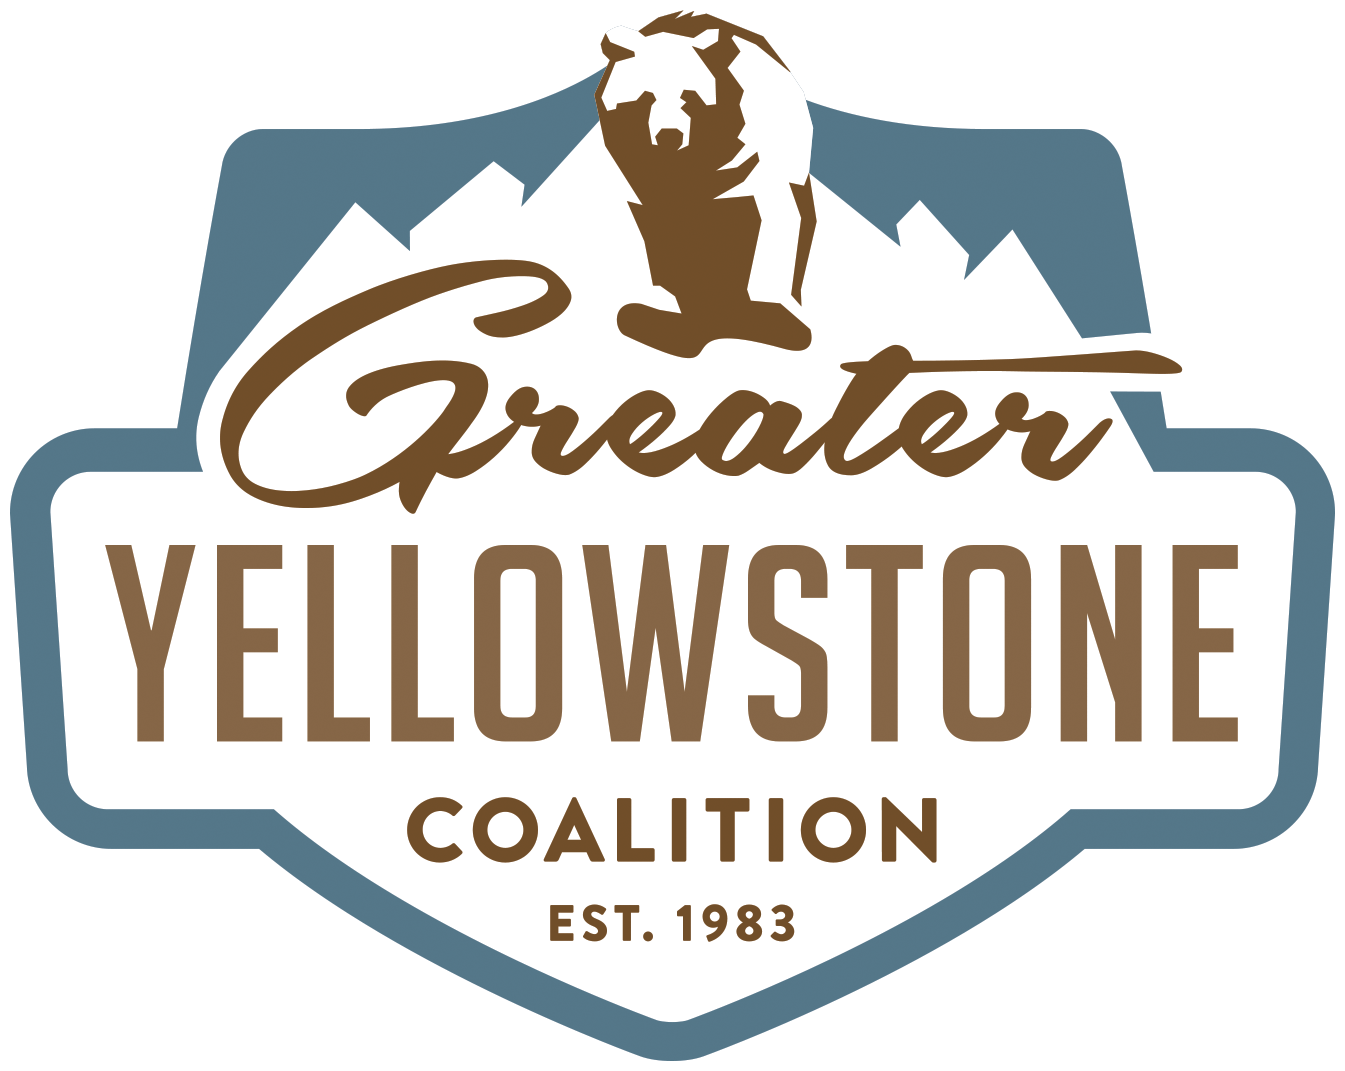 Yellowstone Logo